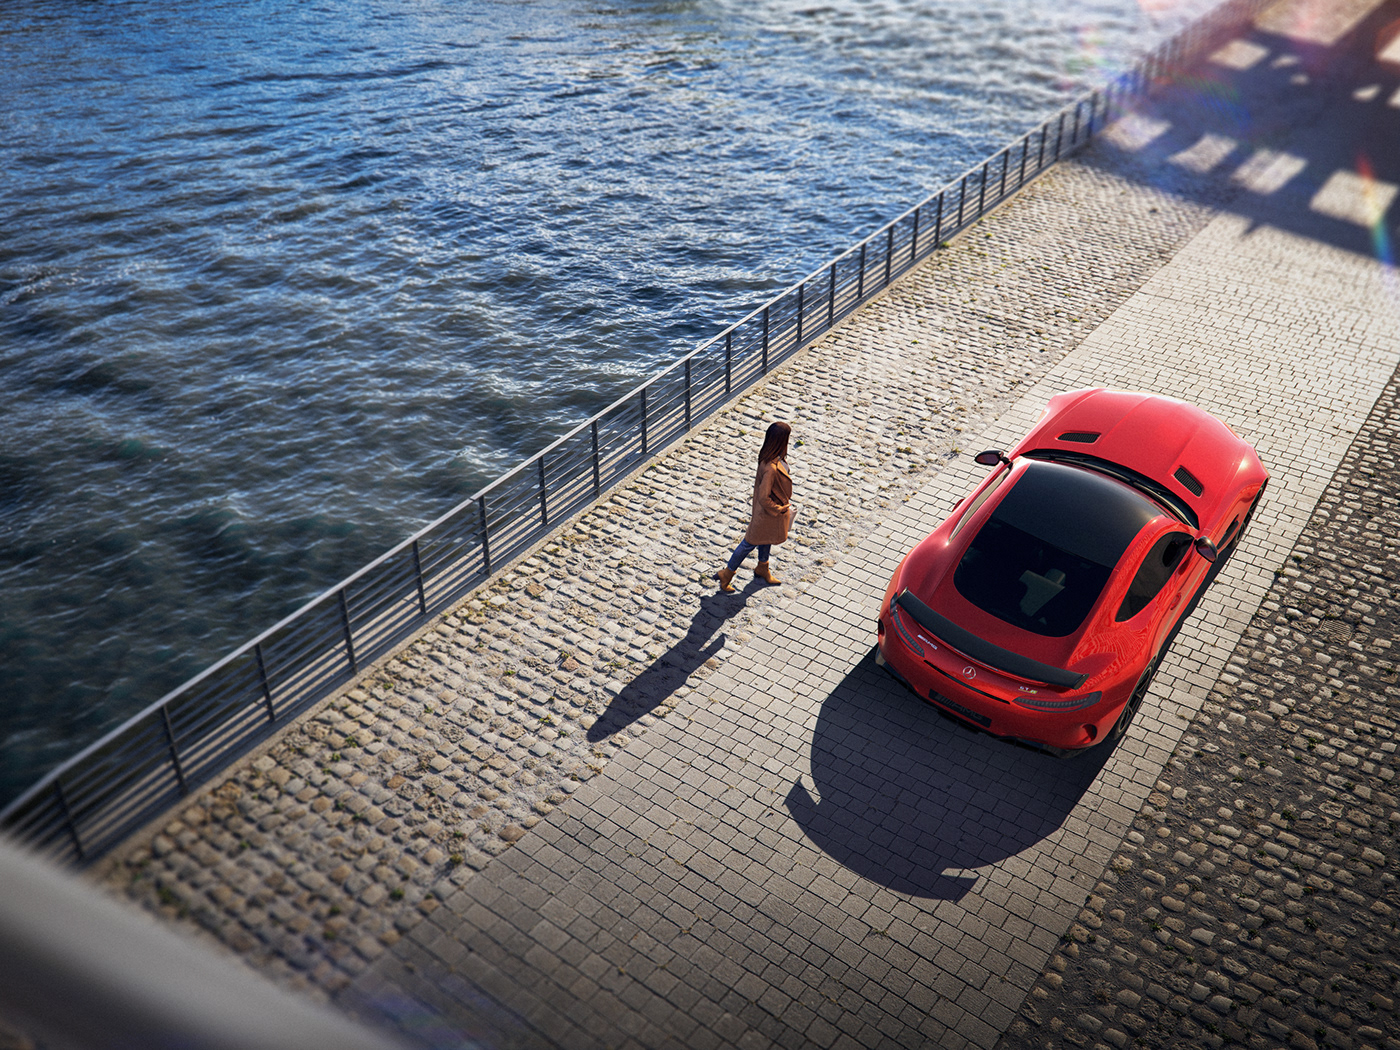 3D automotive   car CGI Digital Art  visualization mercedes Mercedes AMG Post Production retouch